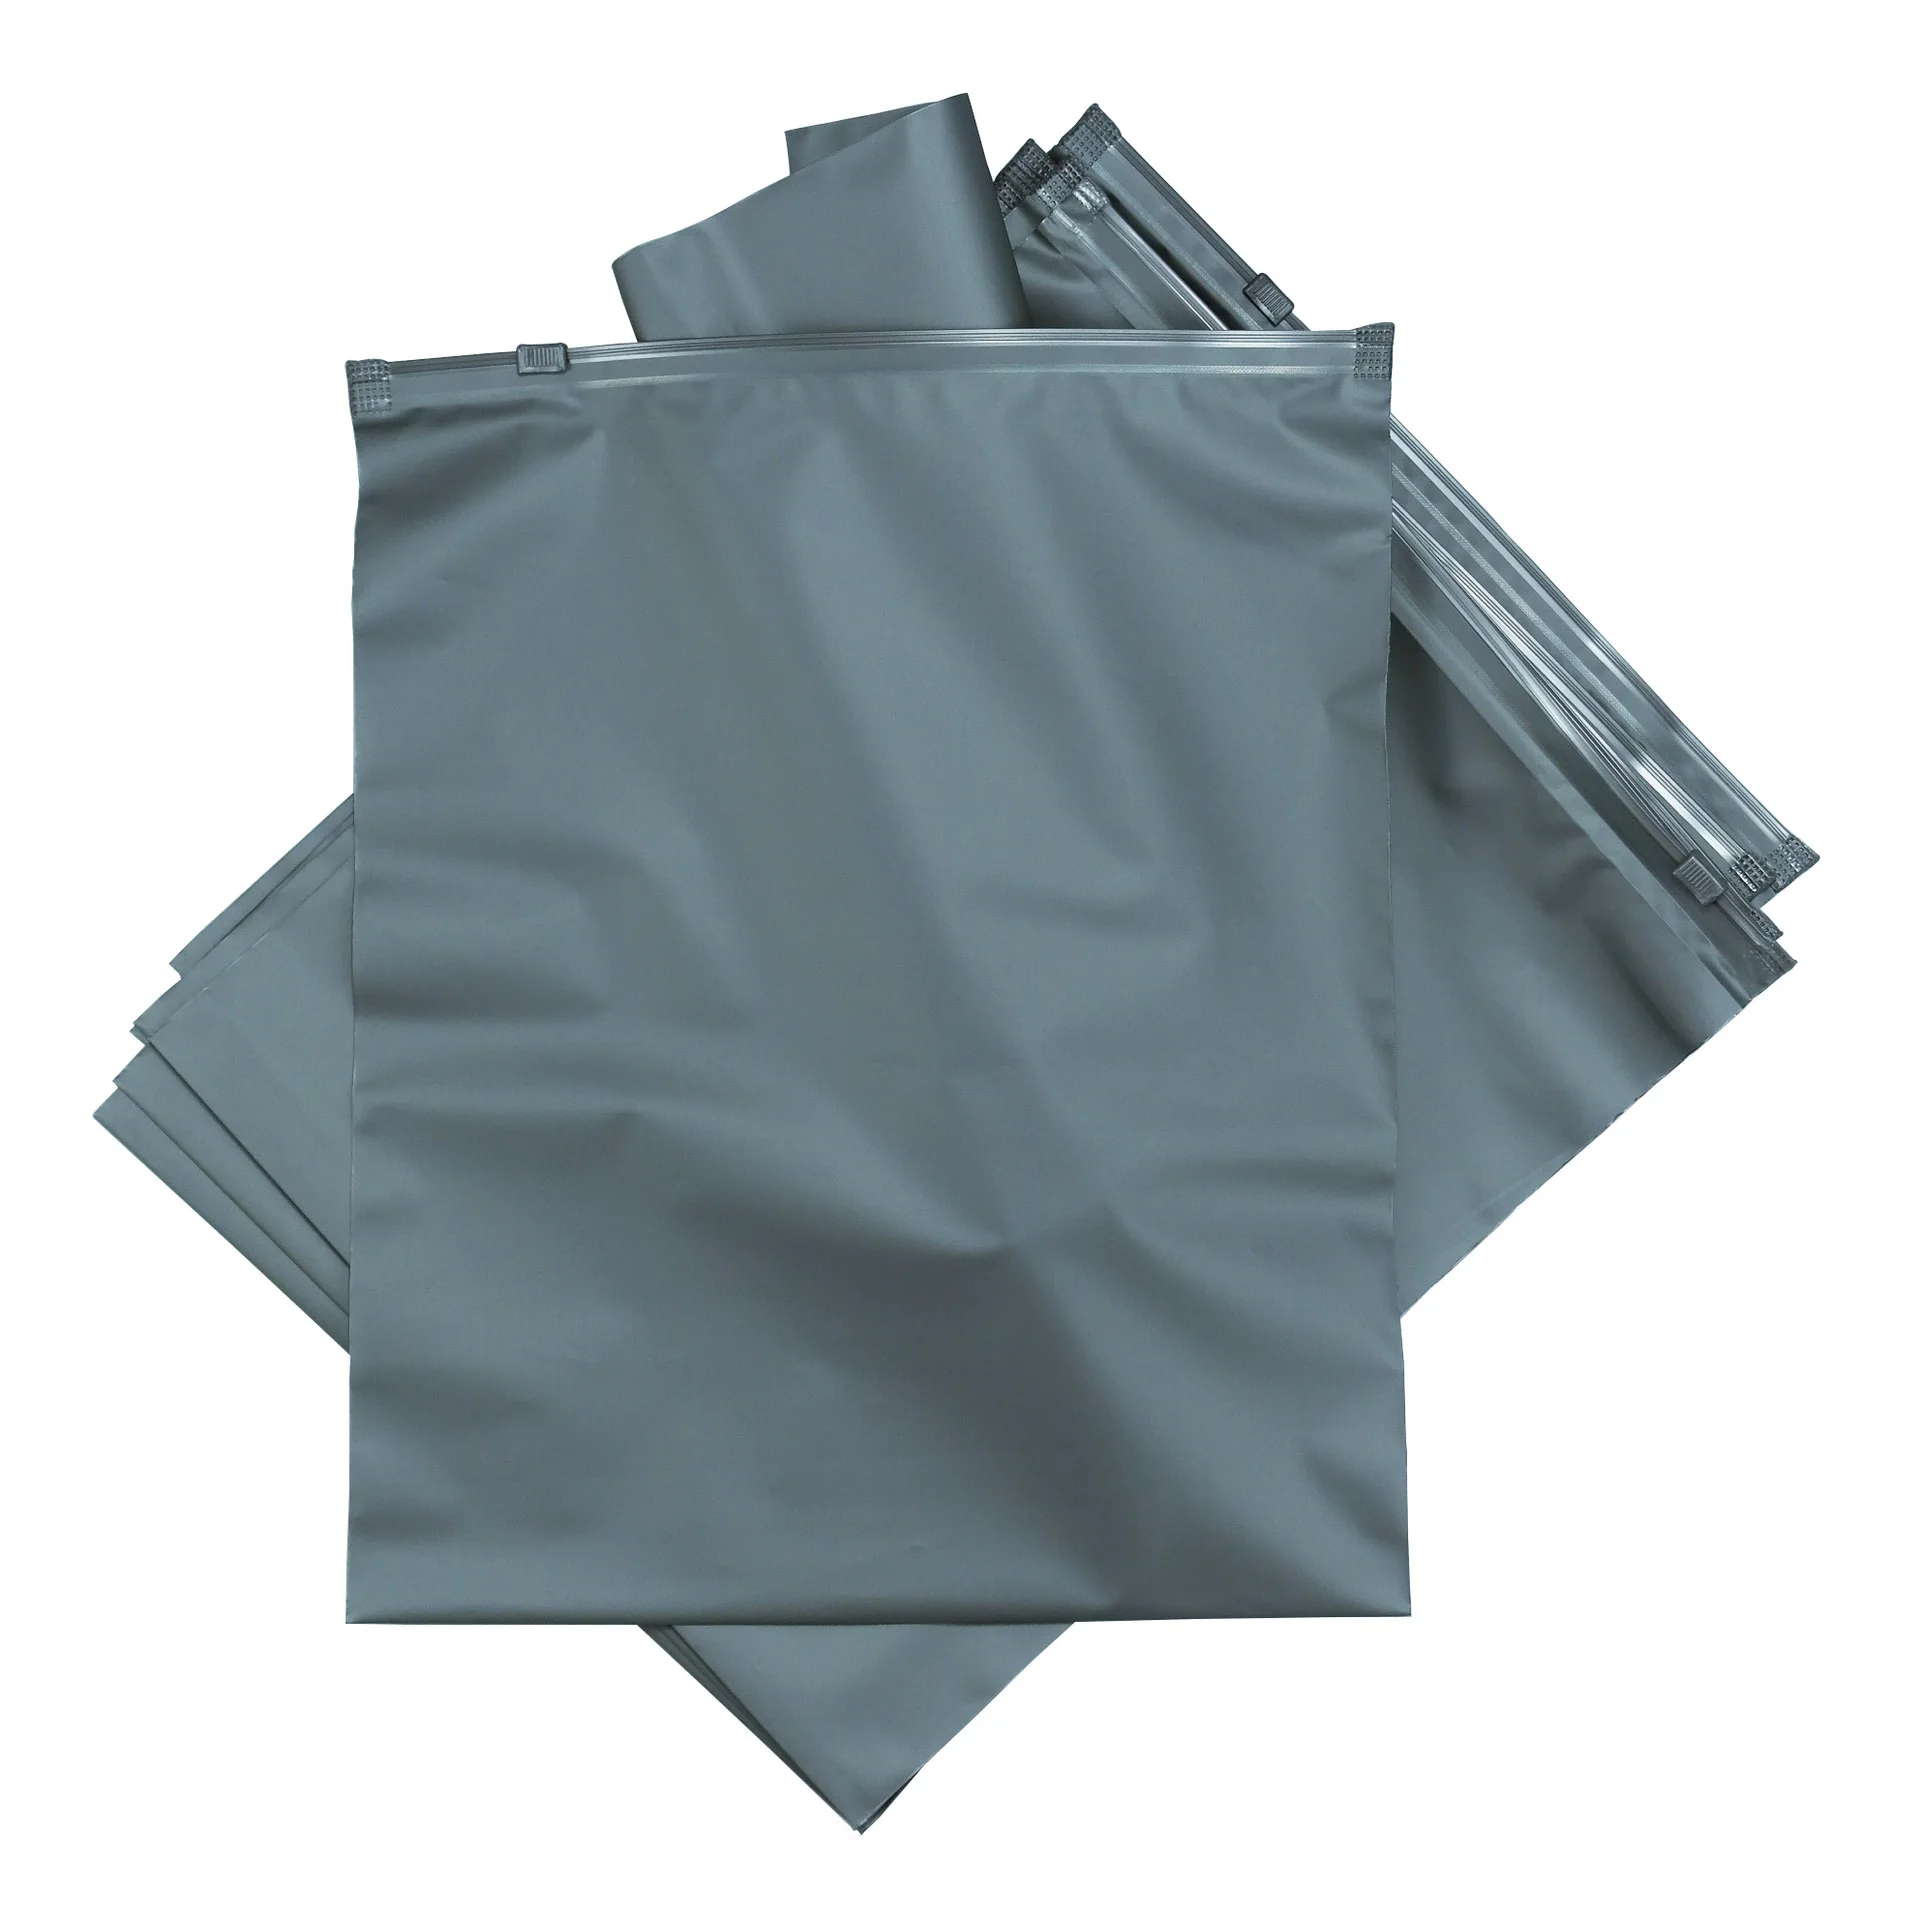 40 SHEIN Reusable Plastic Zipper Bags (Multiple Sizes)